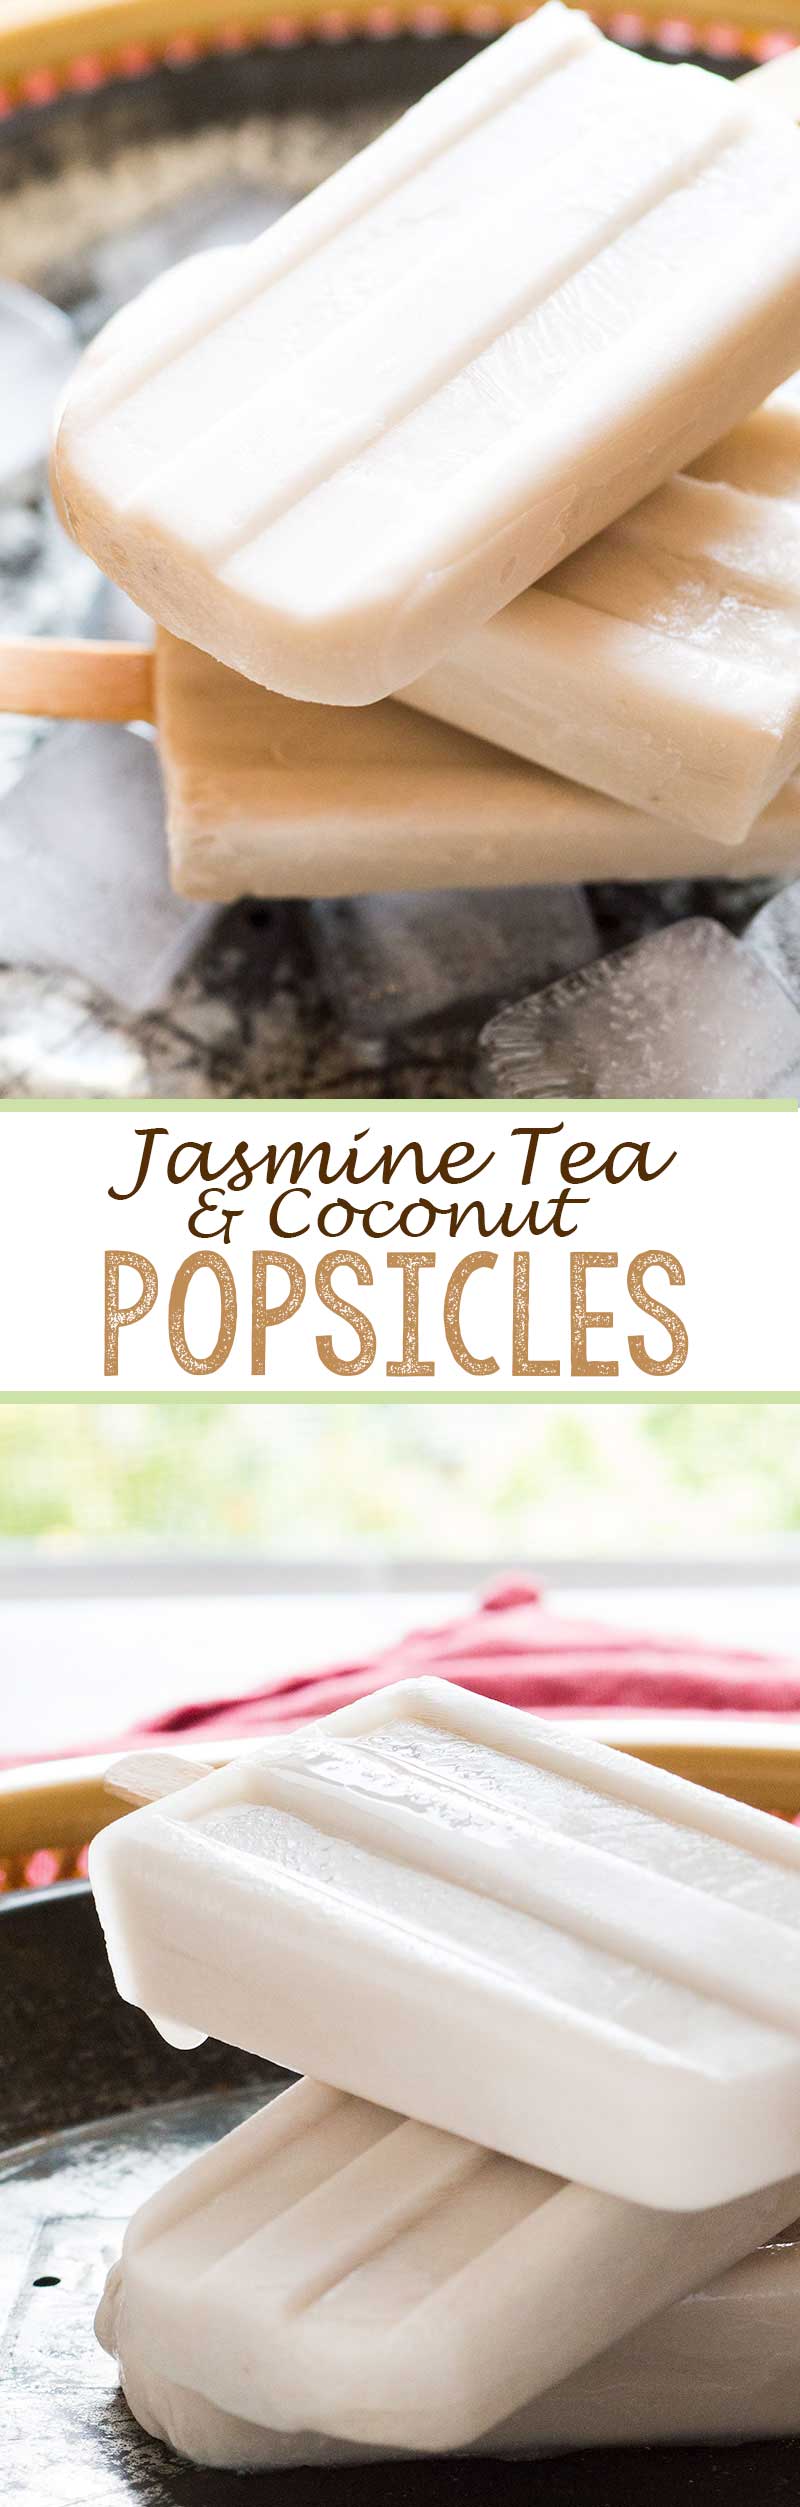 jasmine tea and coconut popsicles